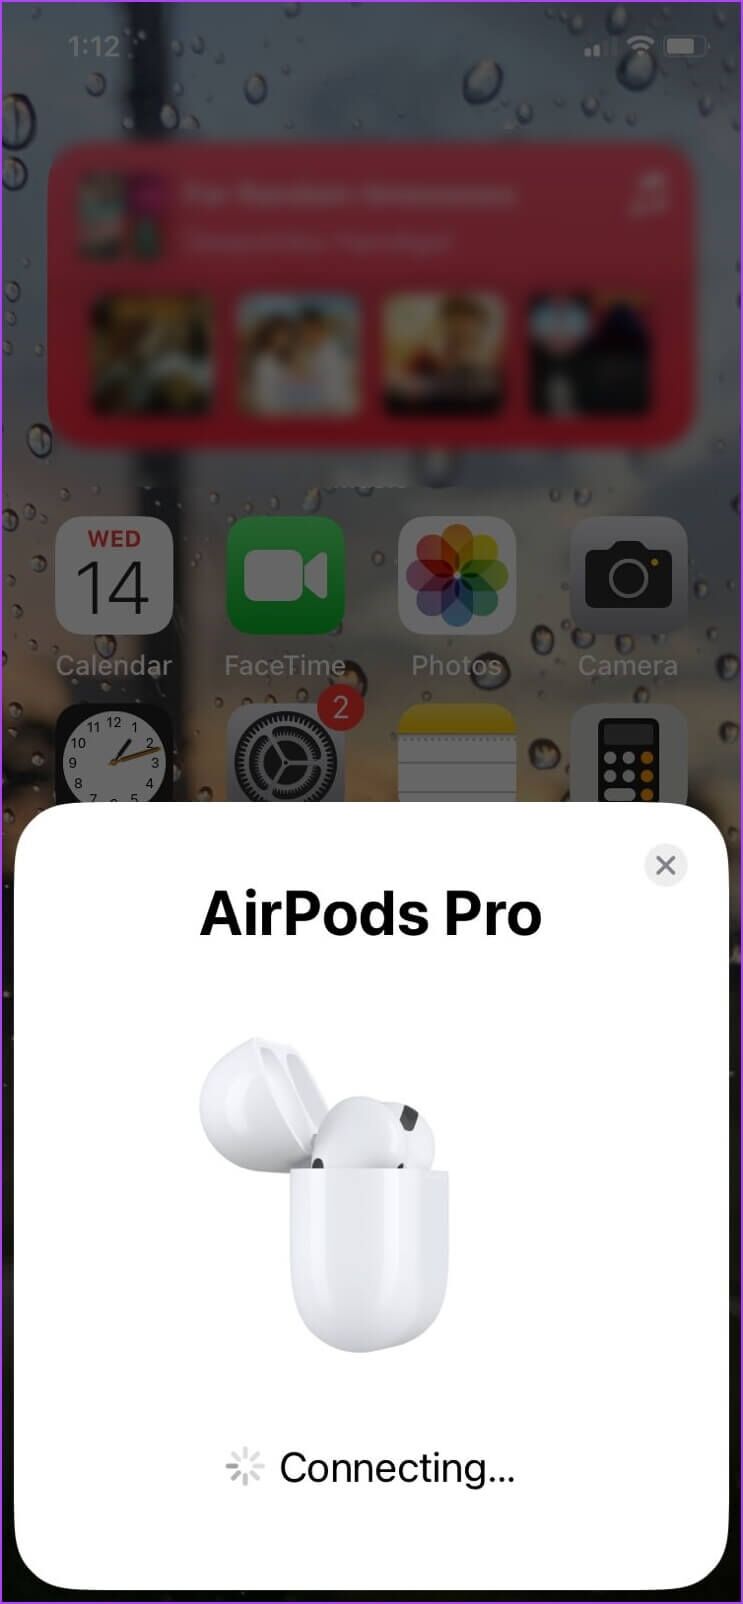 iOS 16: كيفية استخدام الصوت المكاني المخصص على iPhone - %categories